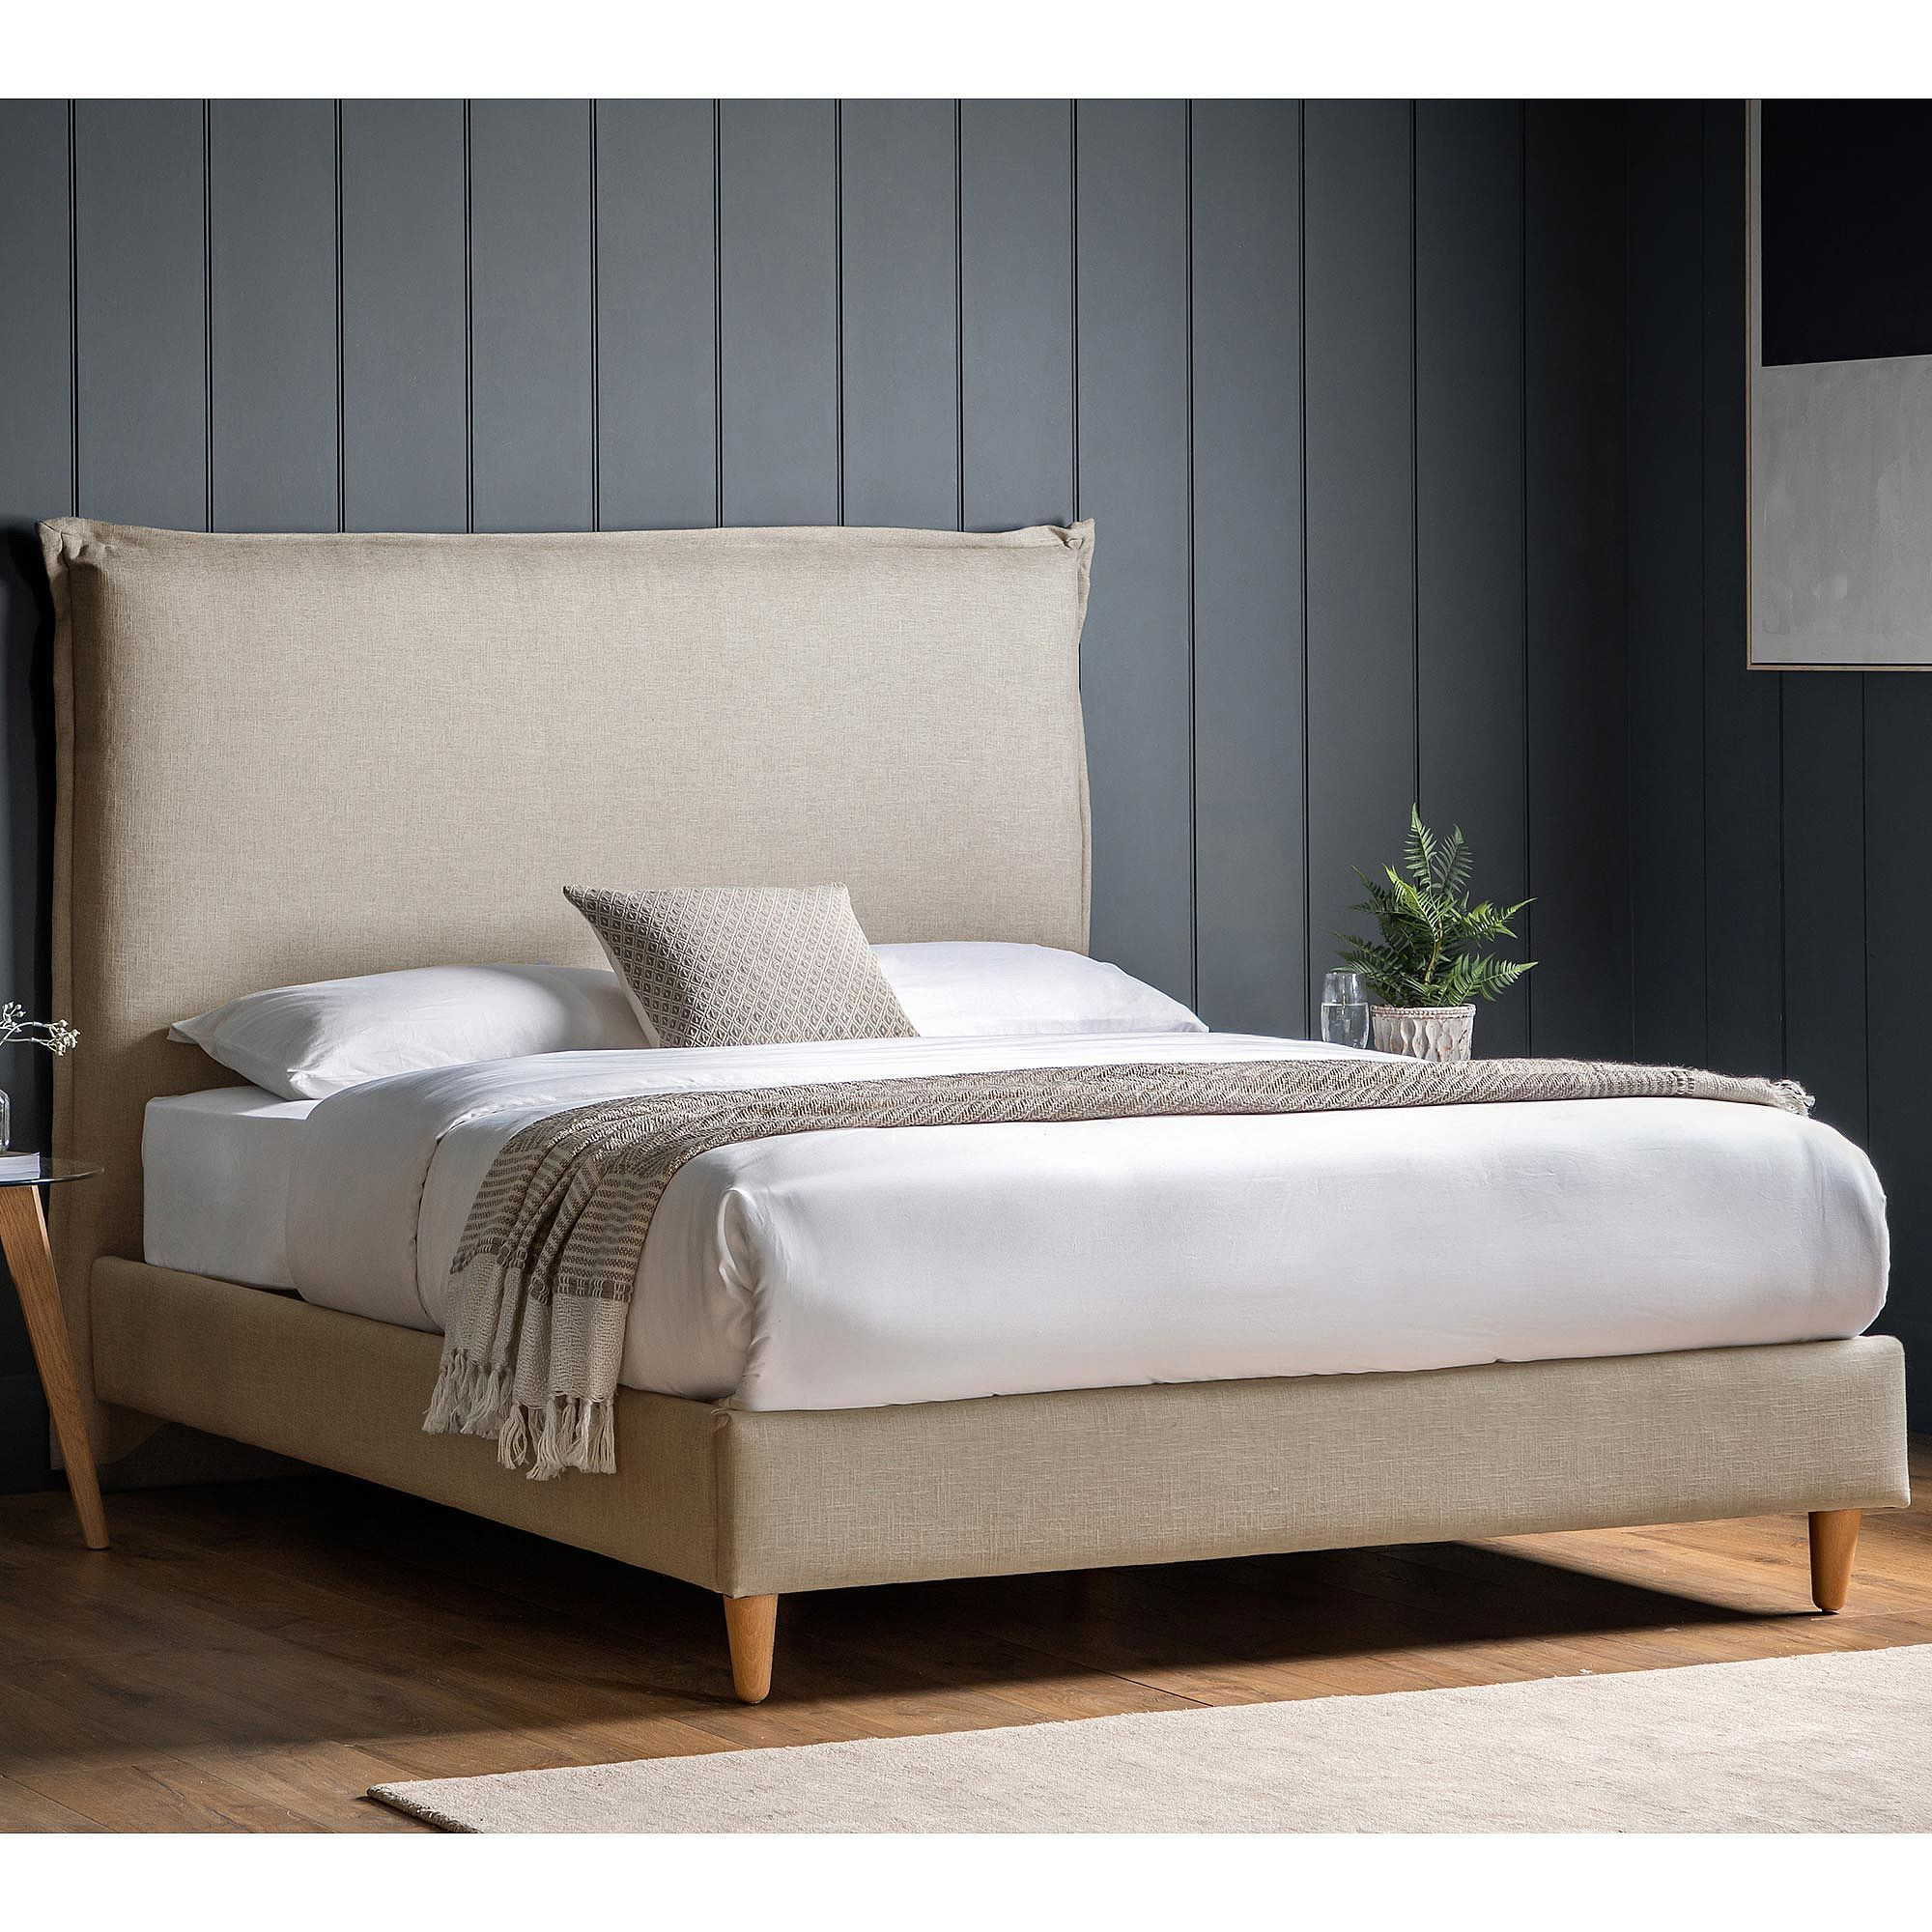 Arcana Upholstered Bed (Super King Size Bed) - image 1